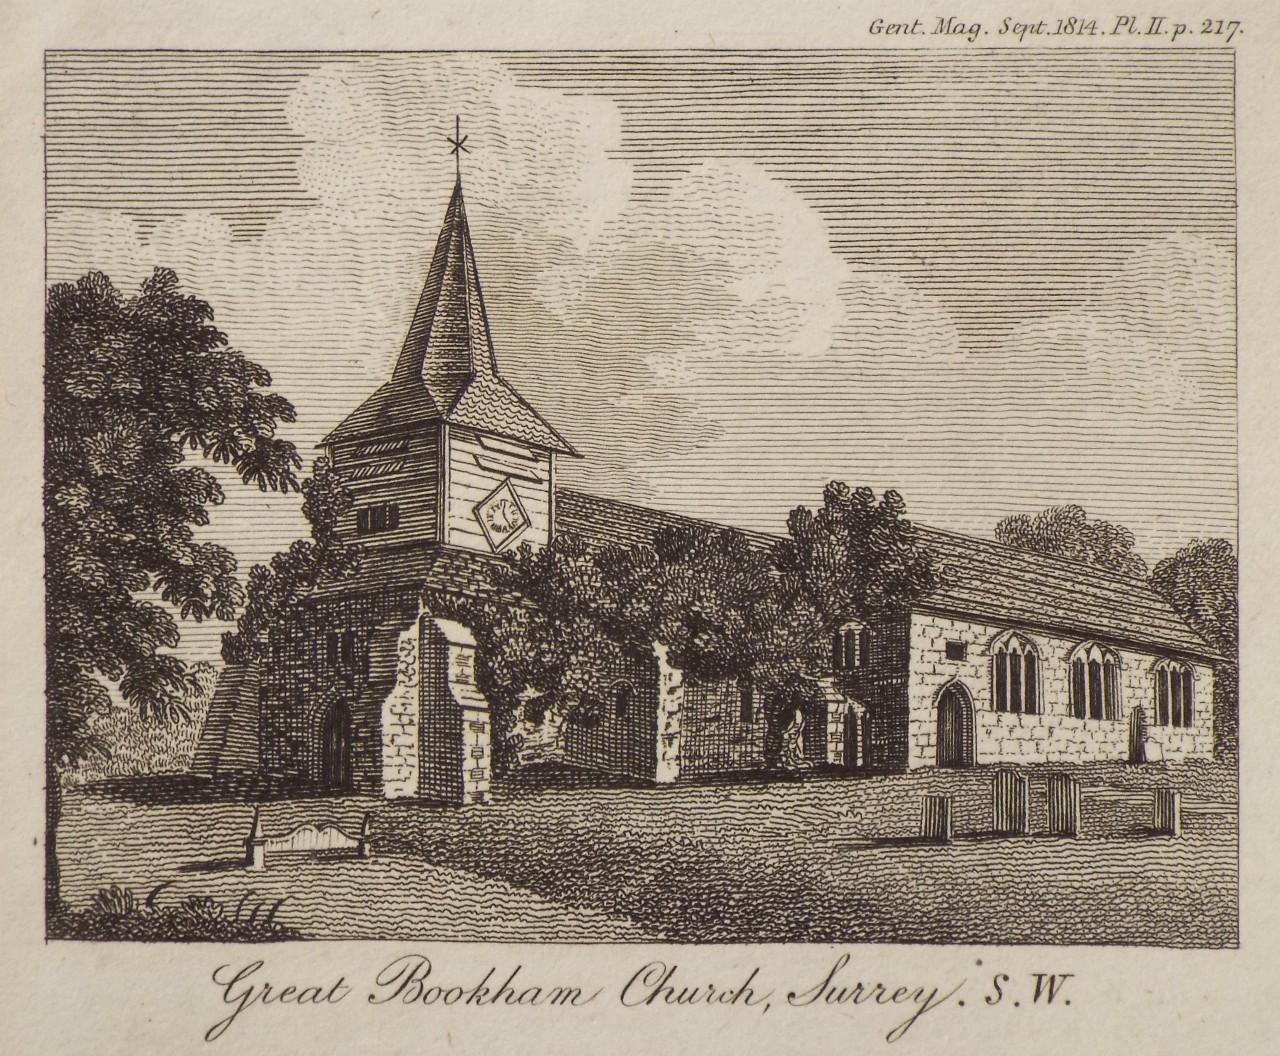 Print - Great Bookham Church, Surrey. S.W.